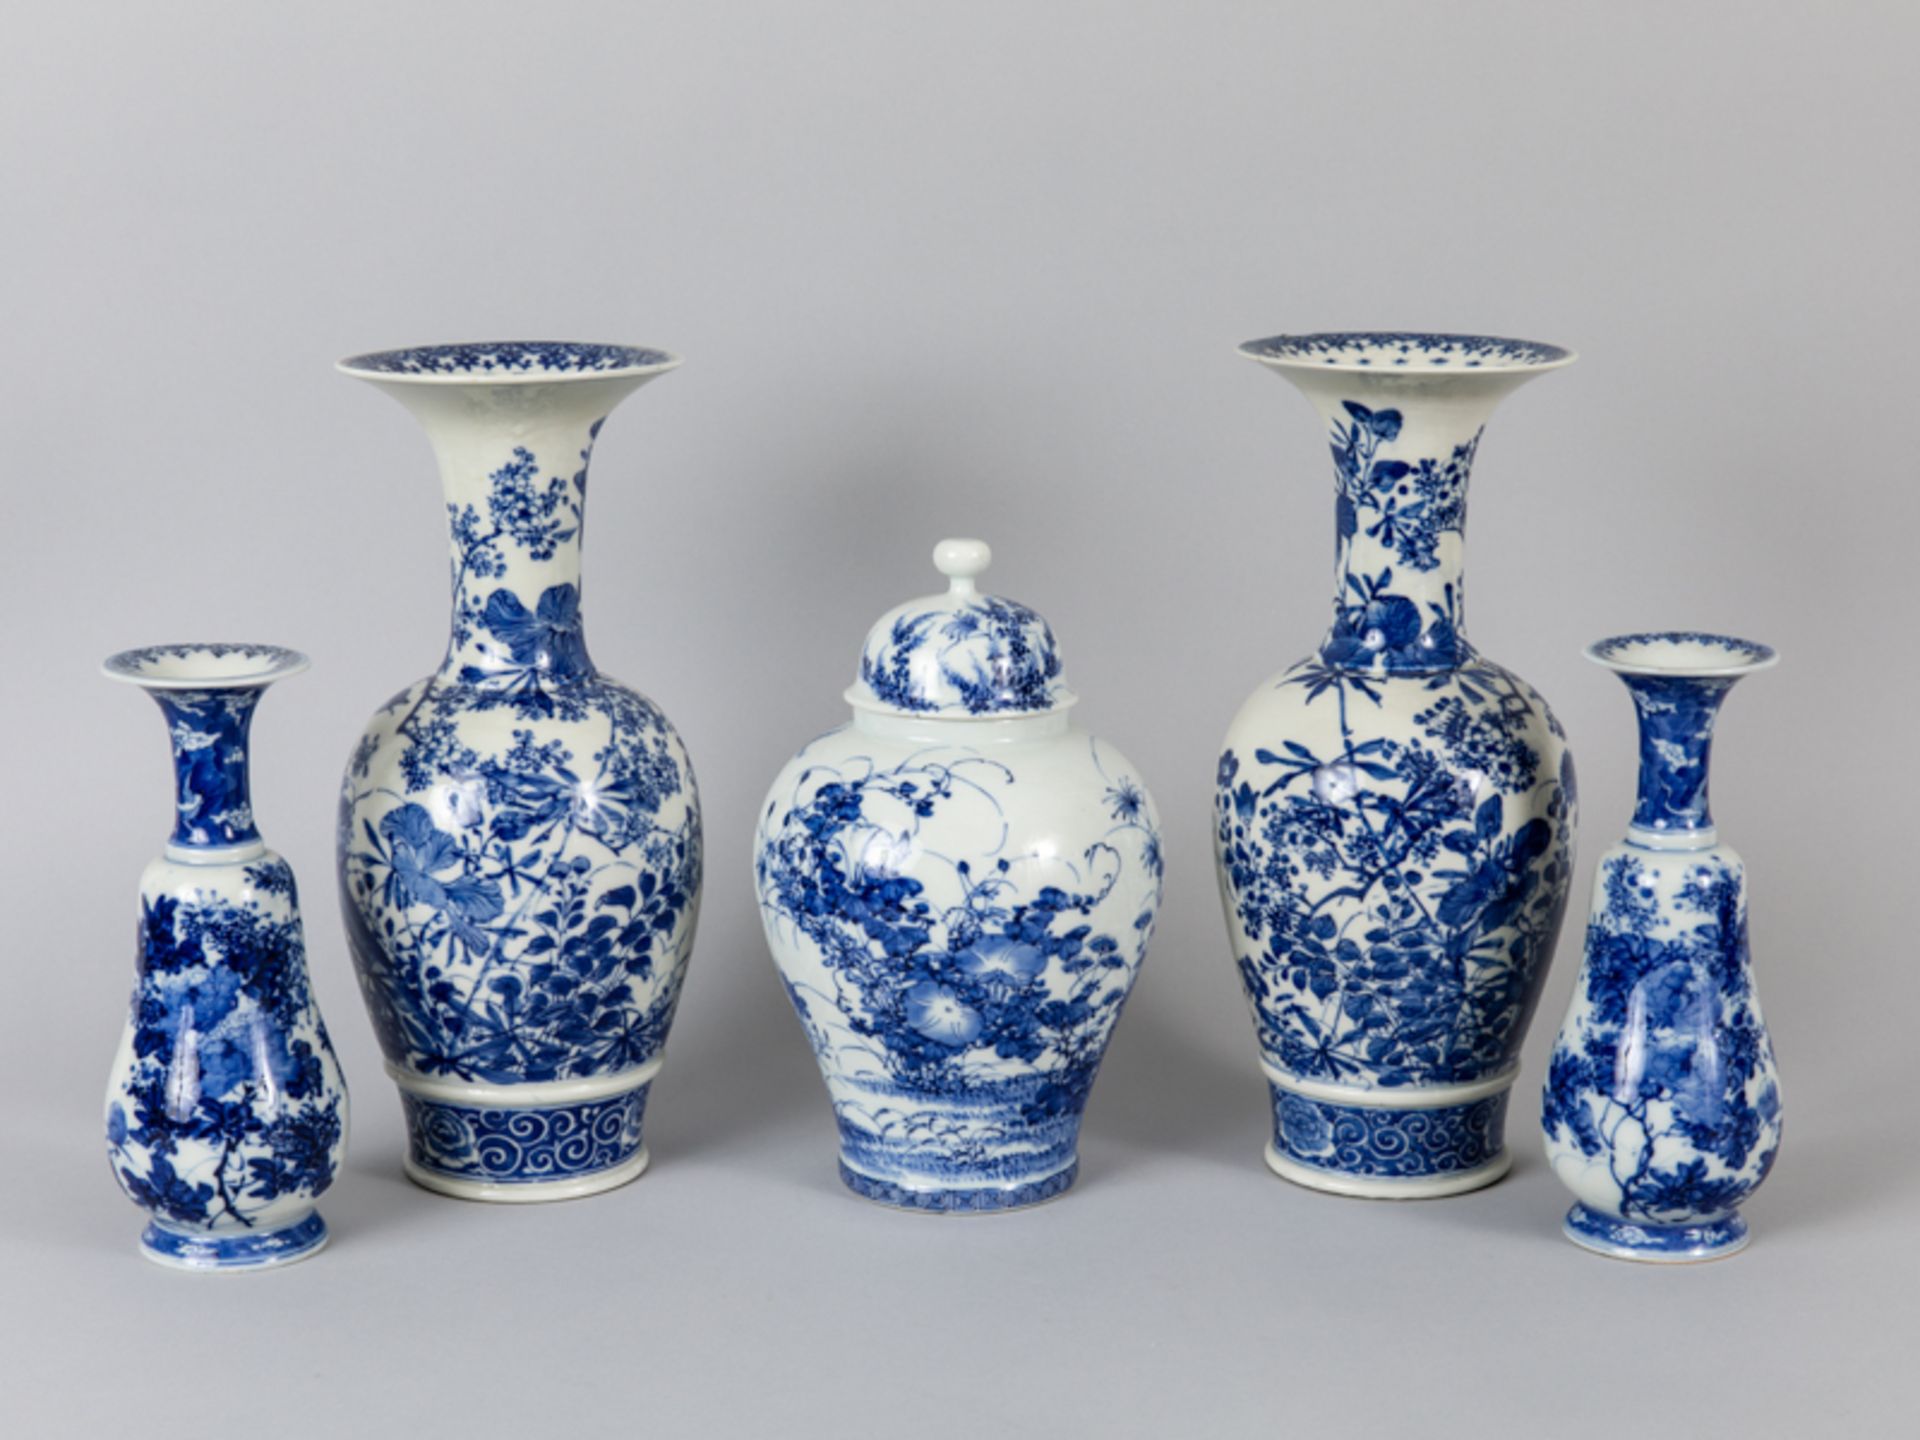 2 Arita-Vasen-Paare + Deckelvase mit Blaumalerei, Japan, Meiji-Zeit (1868 - 1912).